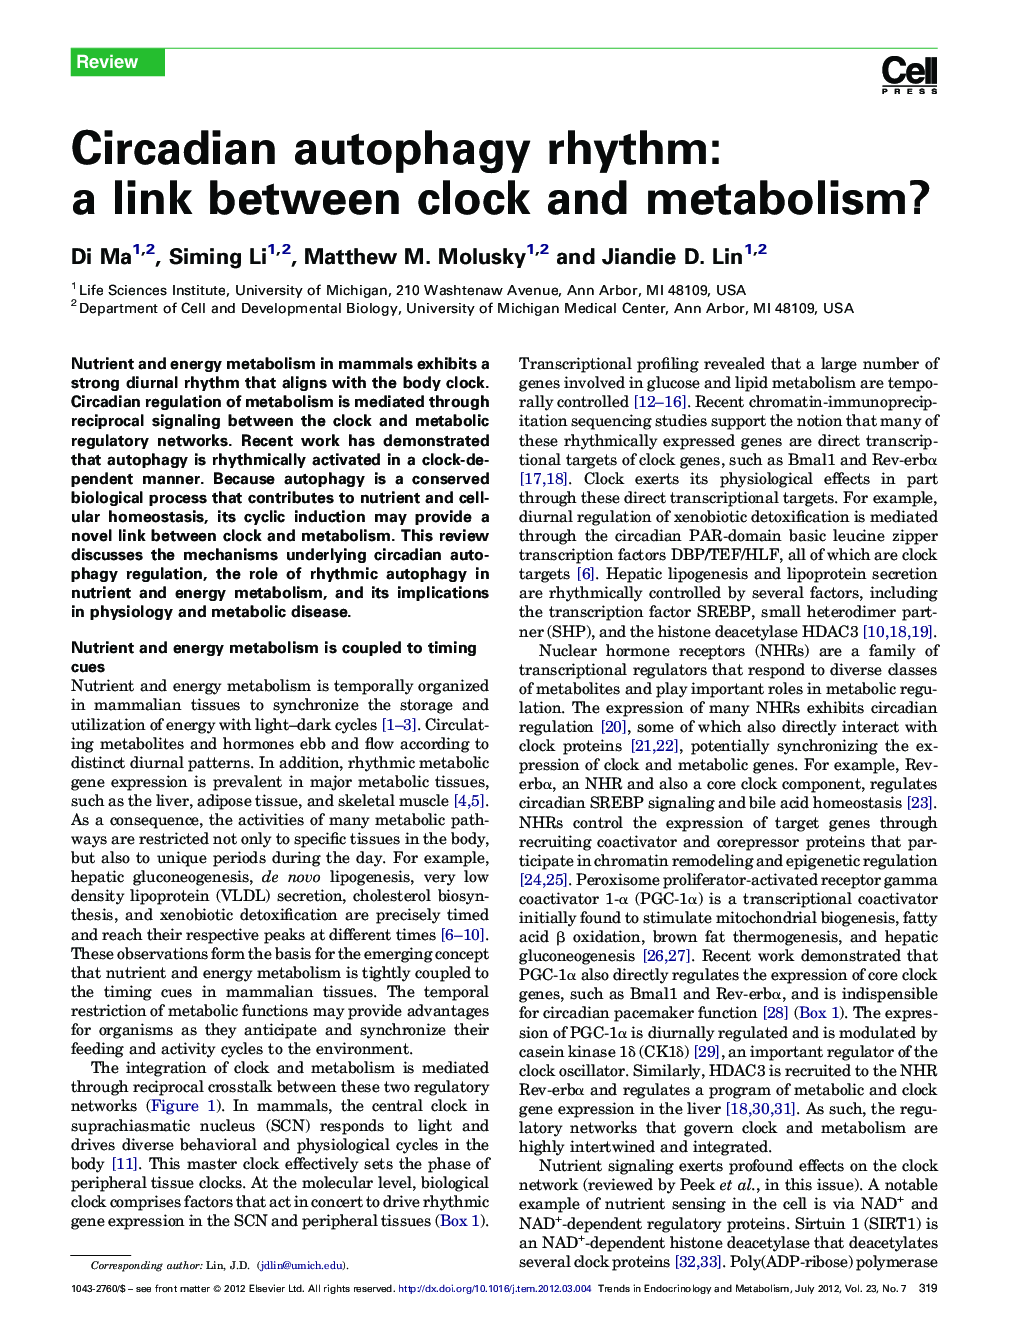 Circadian autophagy rhythm: a link between clock and metabolism?